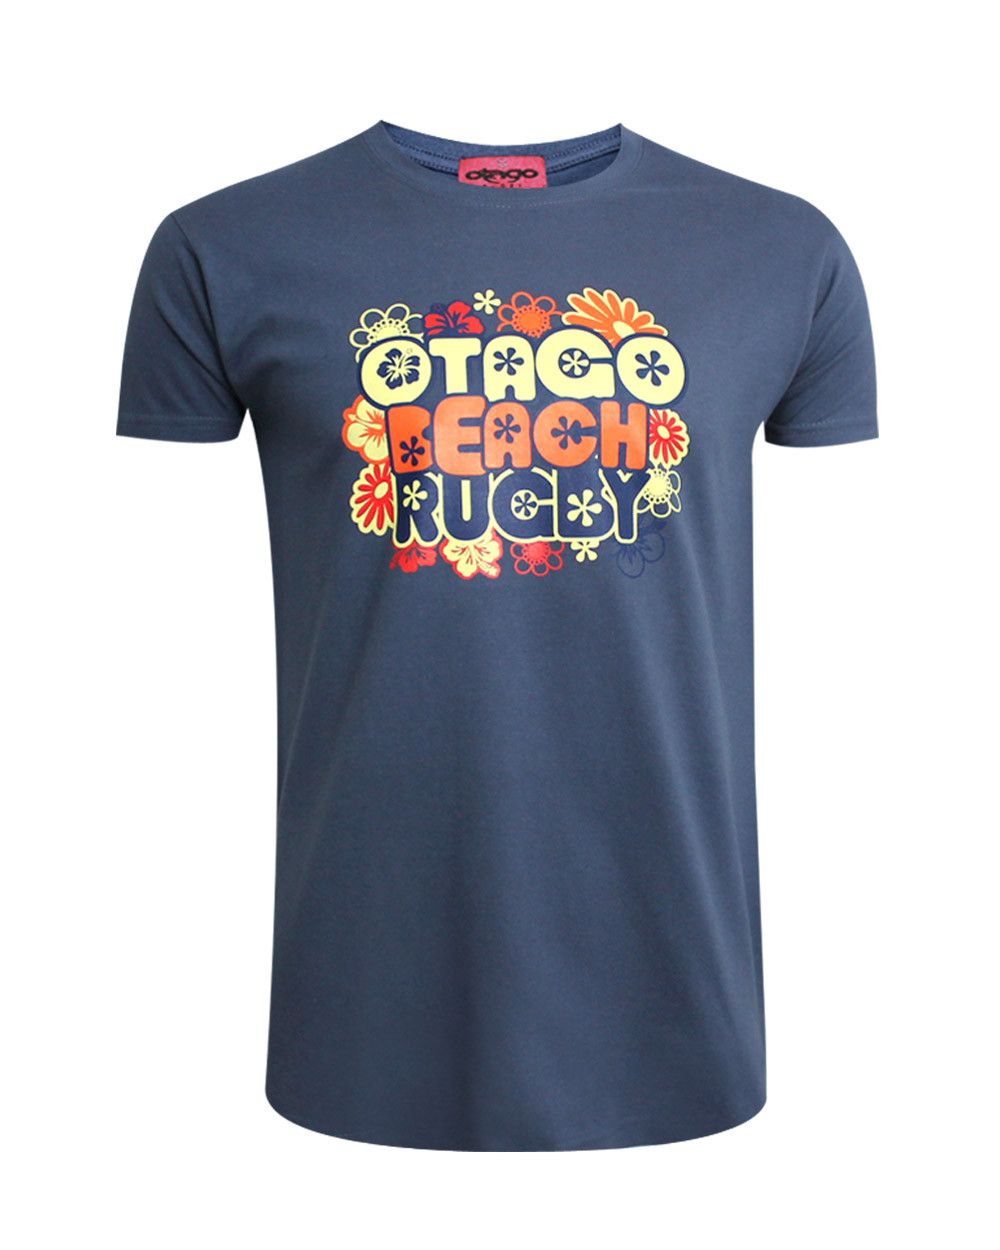 Tee-shirt Power Otago rugby col rond denim homme